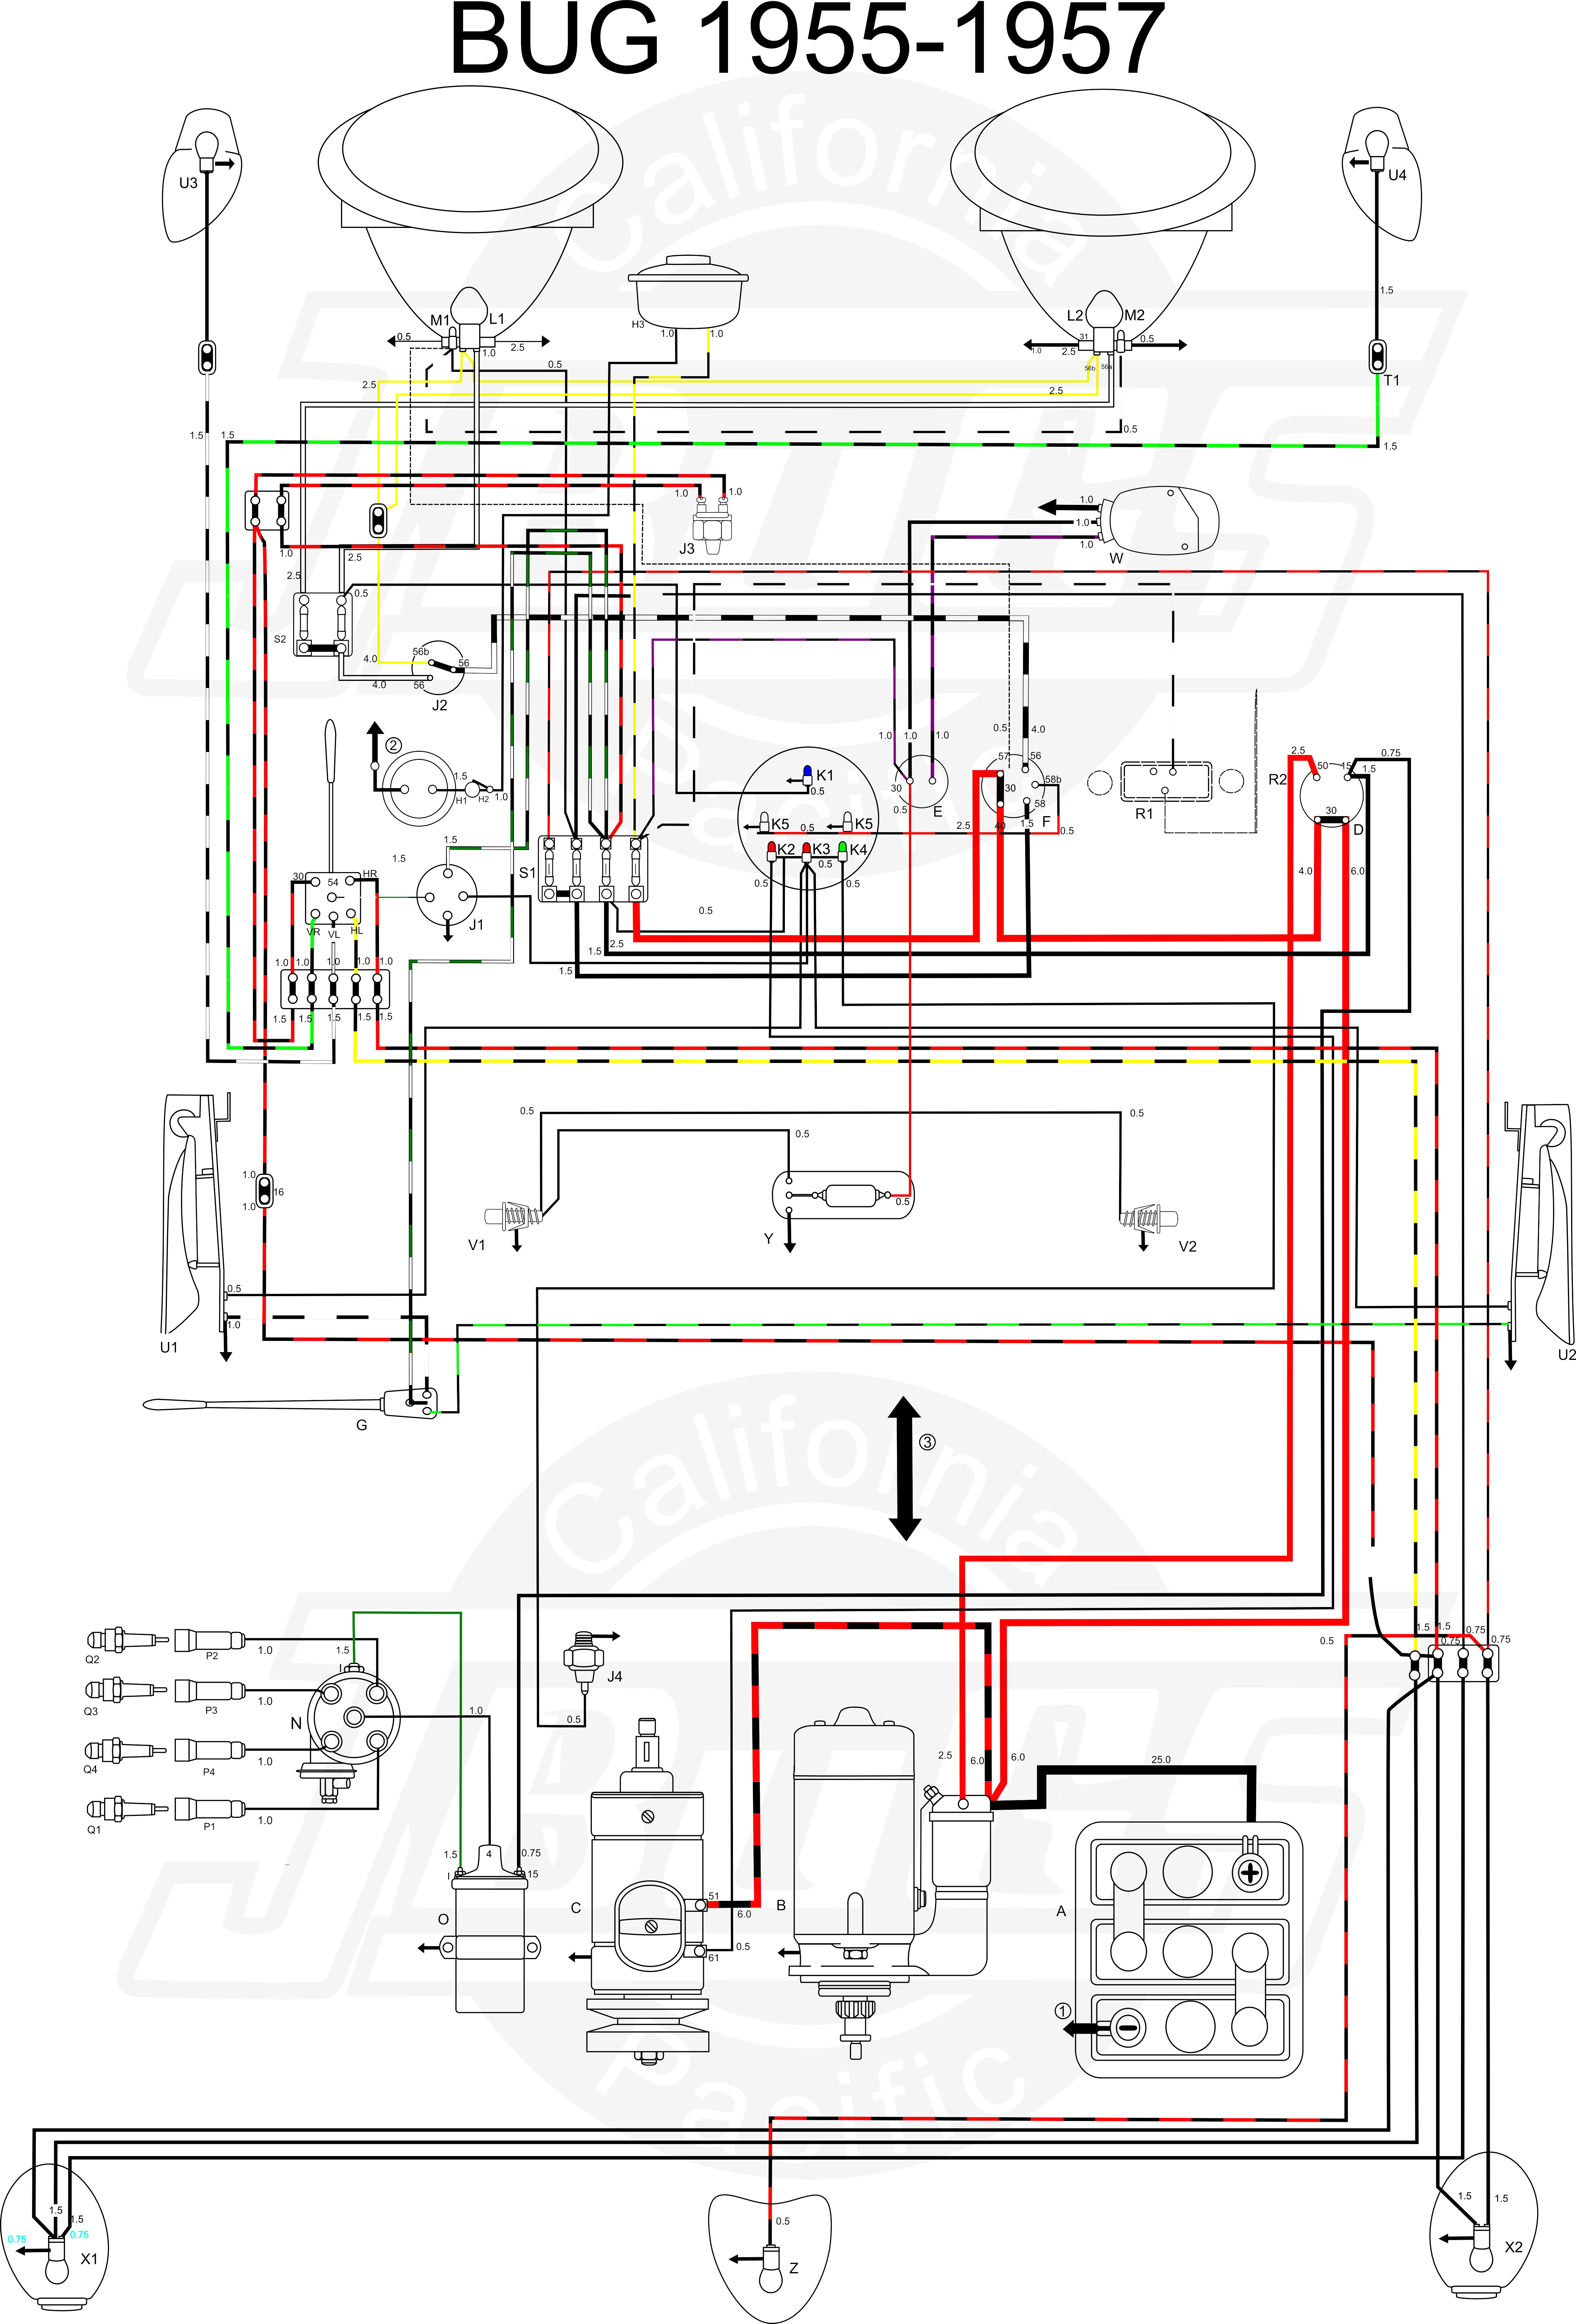 Vw Engine Diagram Vw Beetle Turn Signal Wiring Diagram 1973 Vw Wiring Diagram Vw Of Vw Engine Diagram